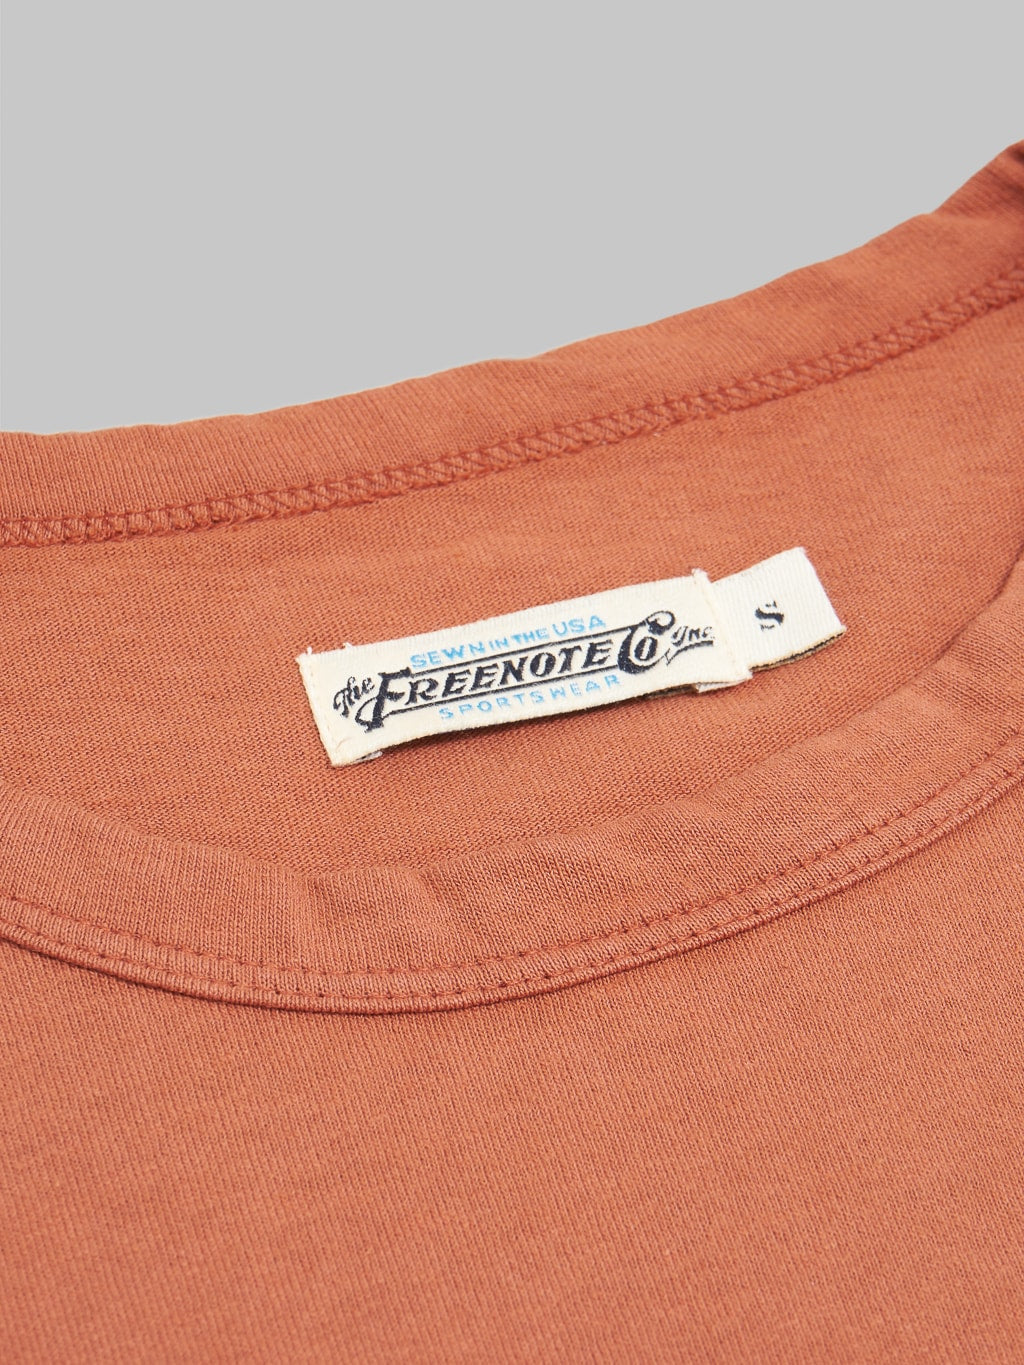 Freenote cloth nine ounce pocket tshirt rust brand label